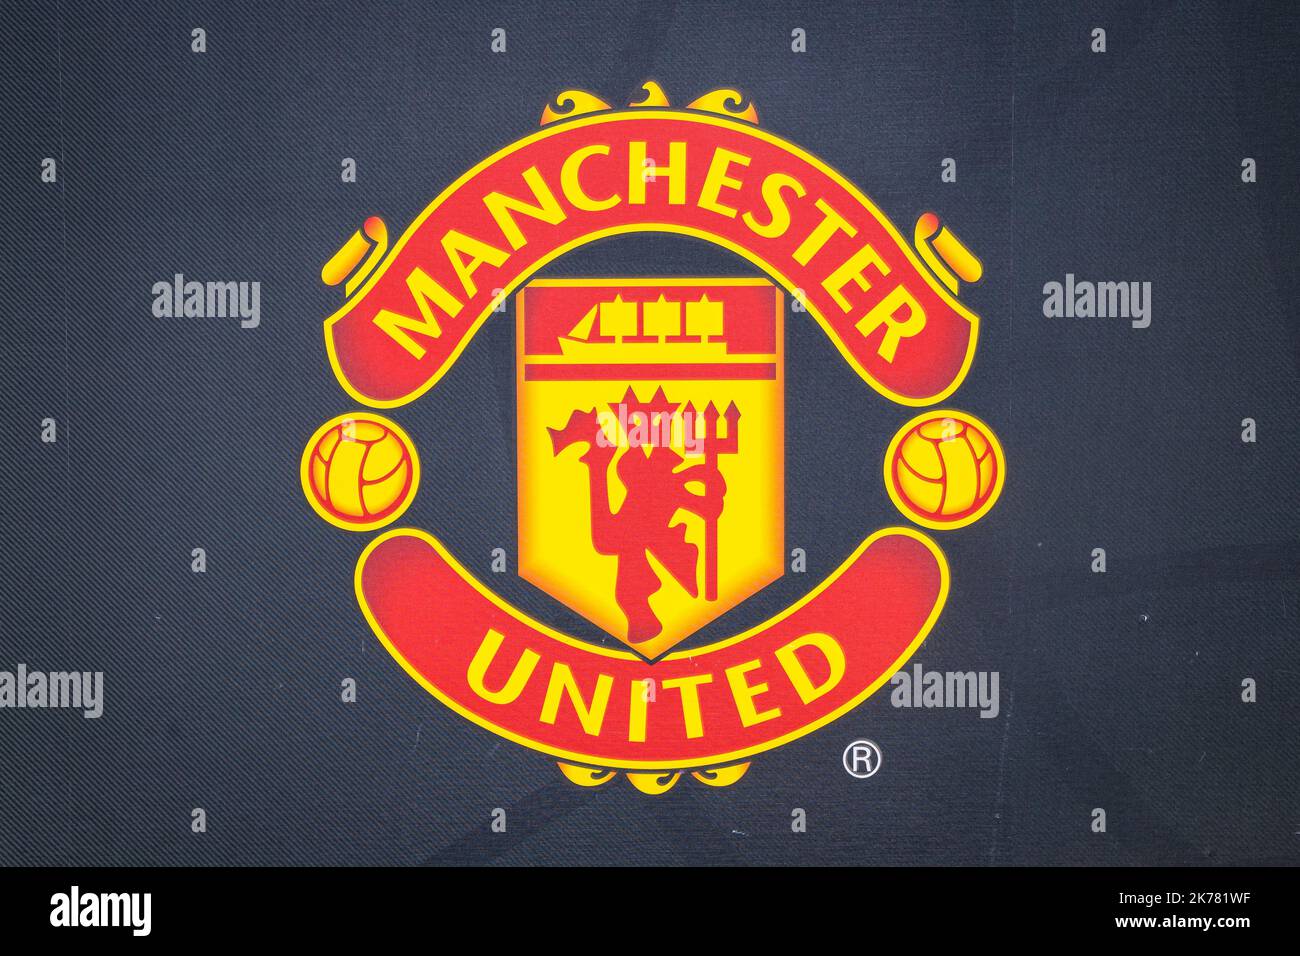 Manchester United's logo Stock Photo